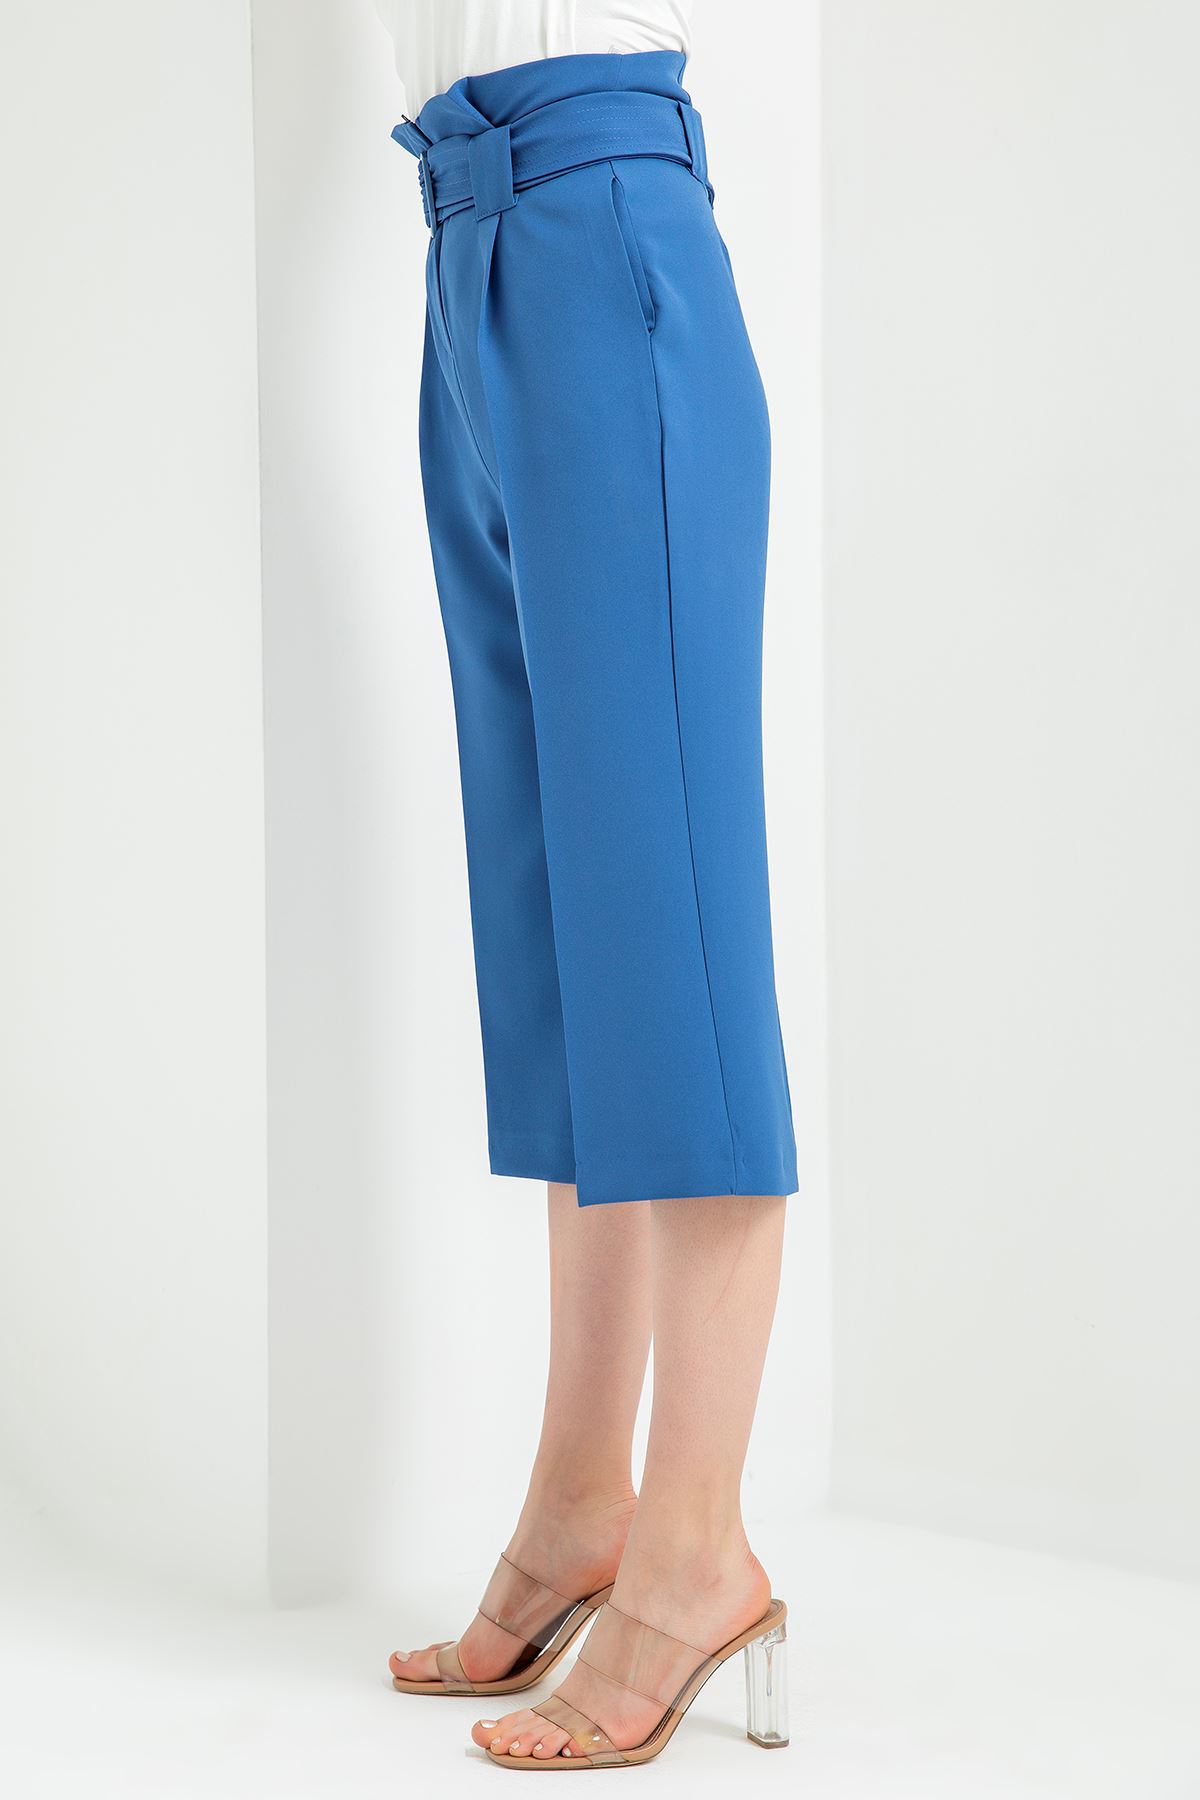 Atlas Fabric 3/4 Short Wide Wide Leg Women'S Trouser - Navy Blue 